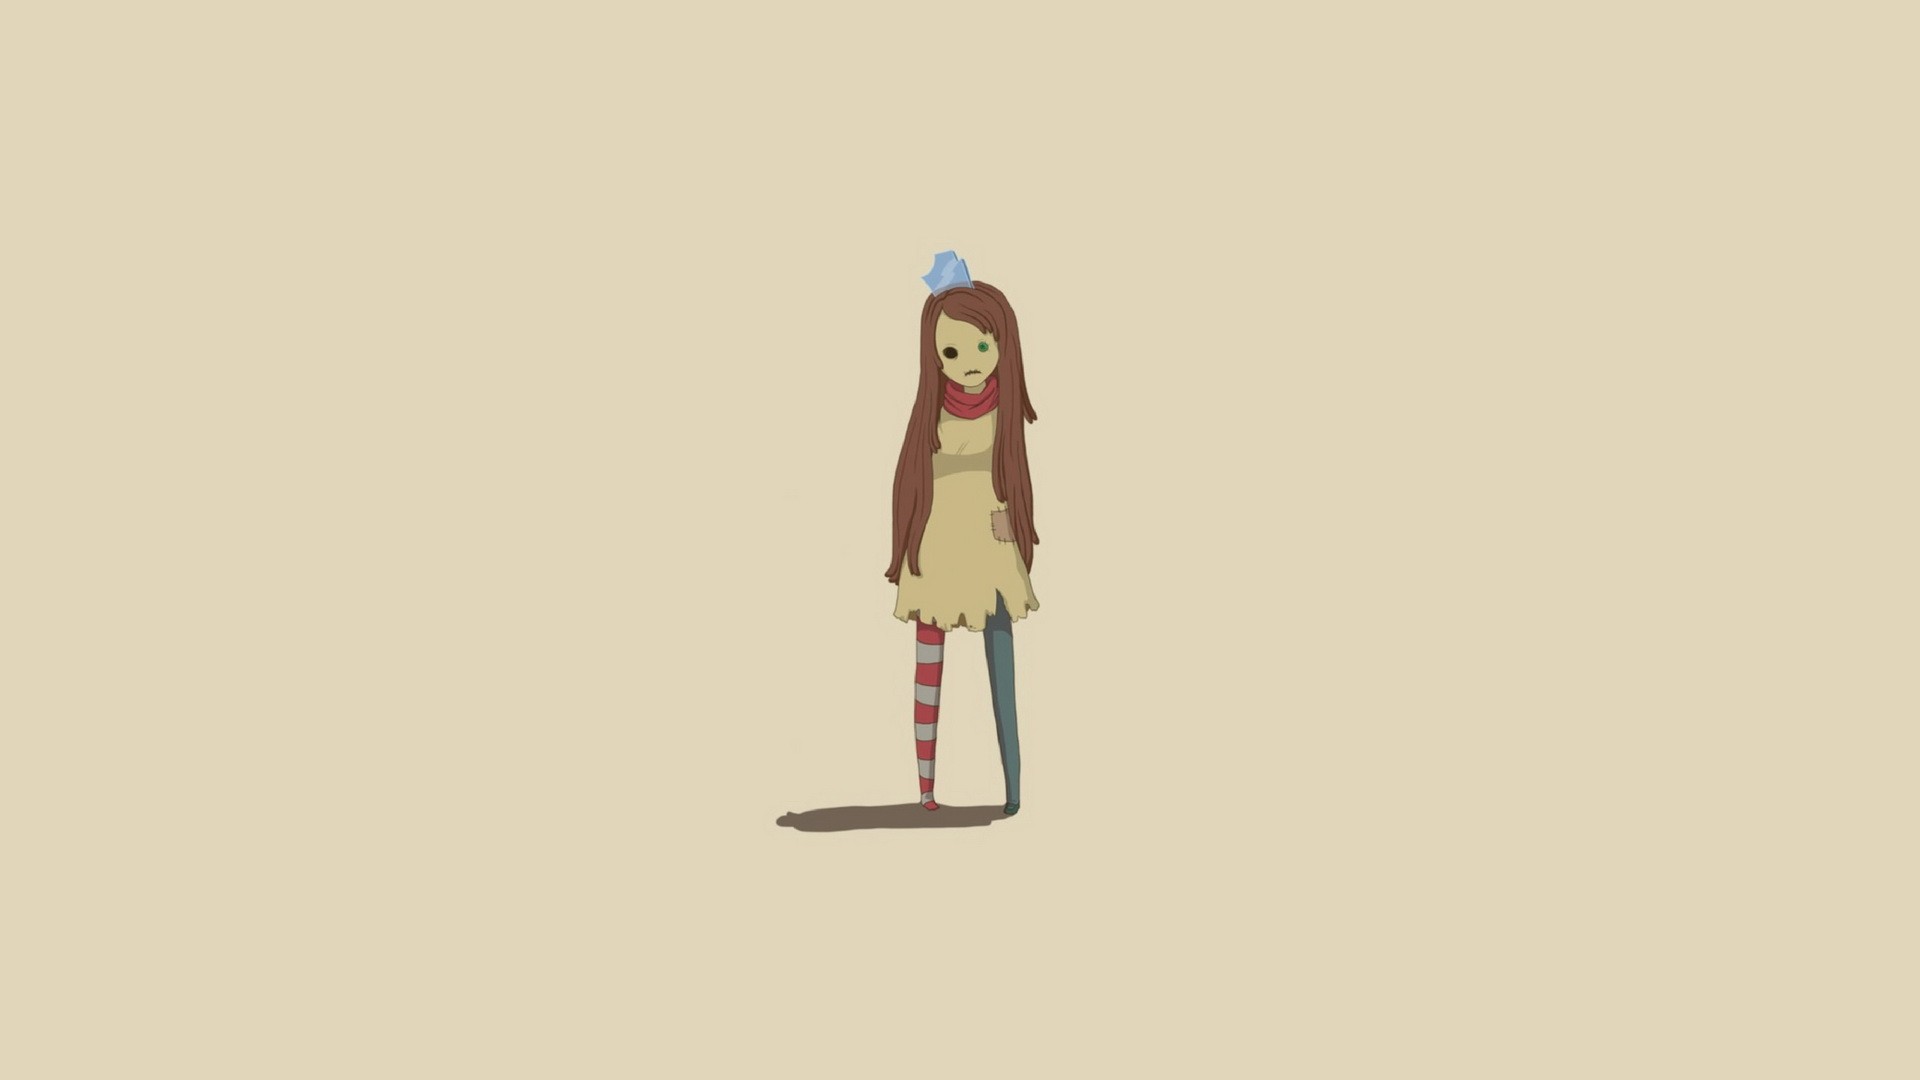 General 1920x1080 Adventure Time princess minimalism red blue brown simple background beige background long hair